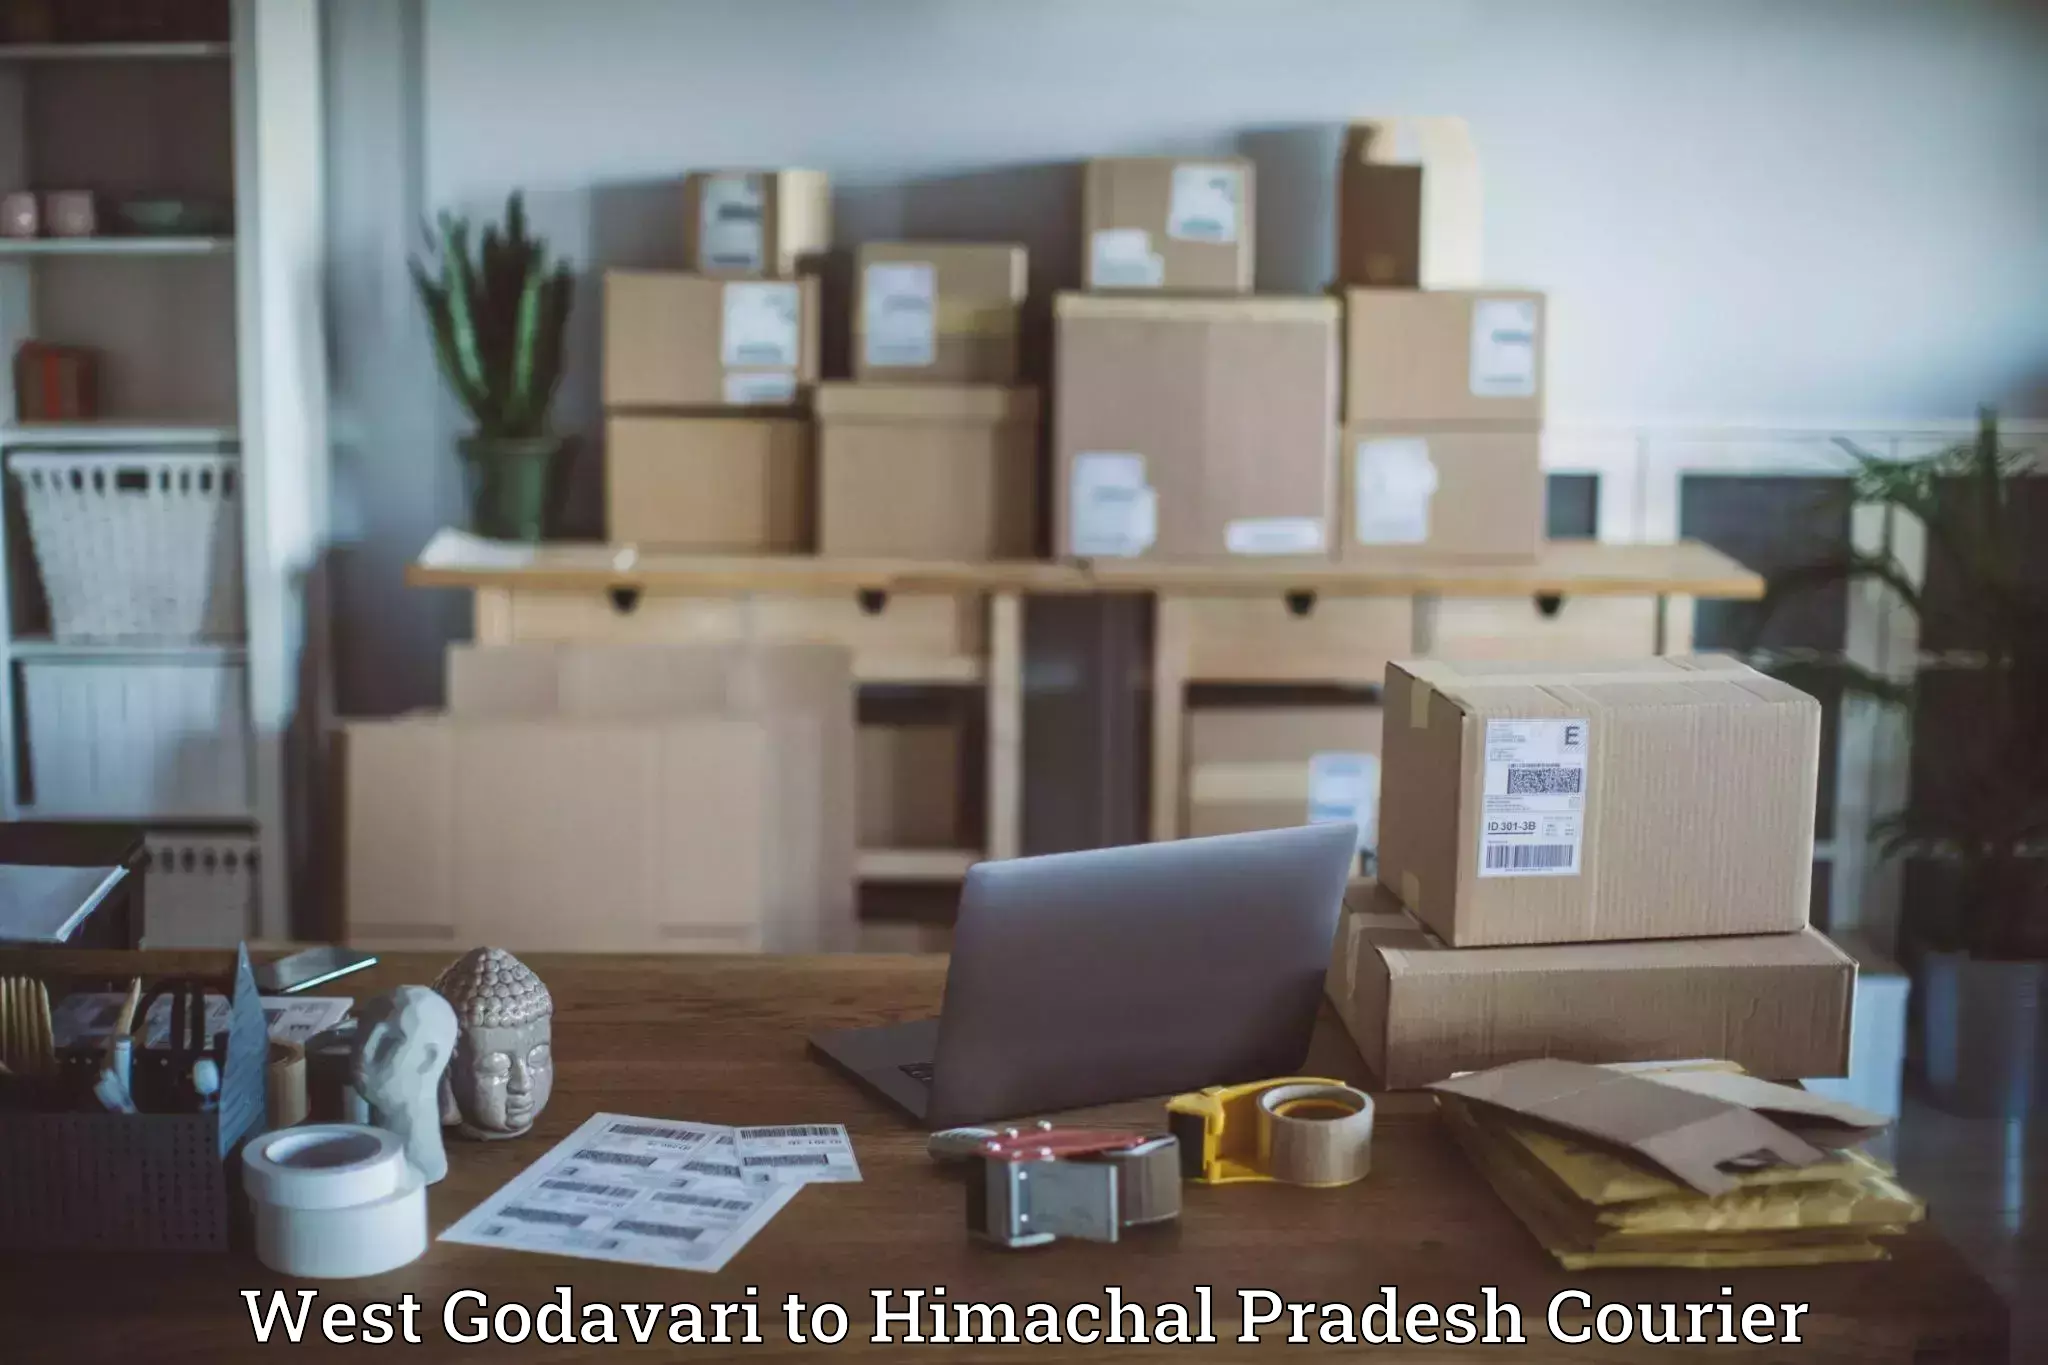 High-capacity parcel service West Godavari to Rehan